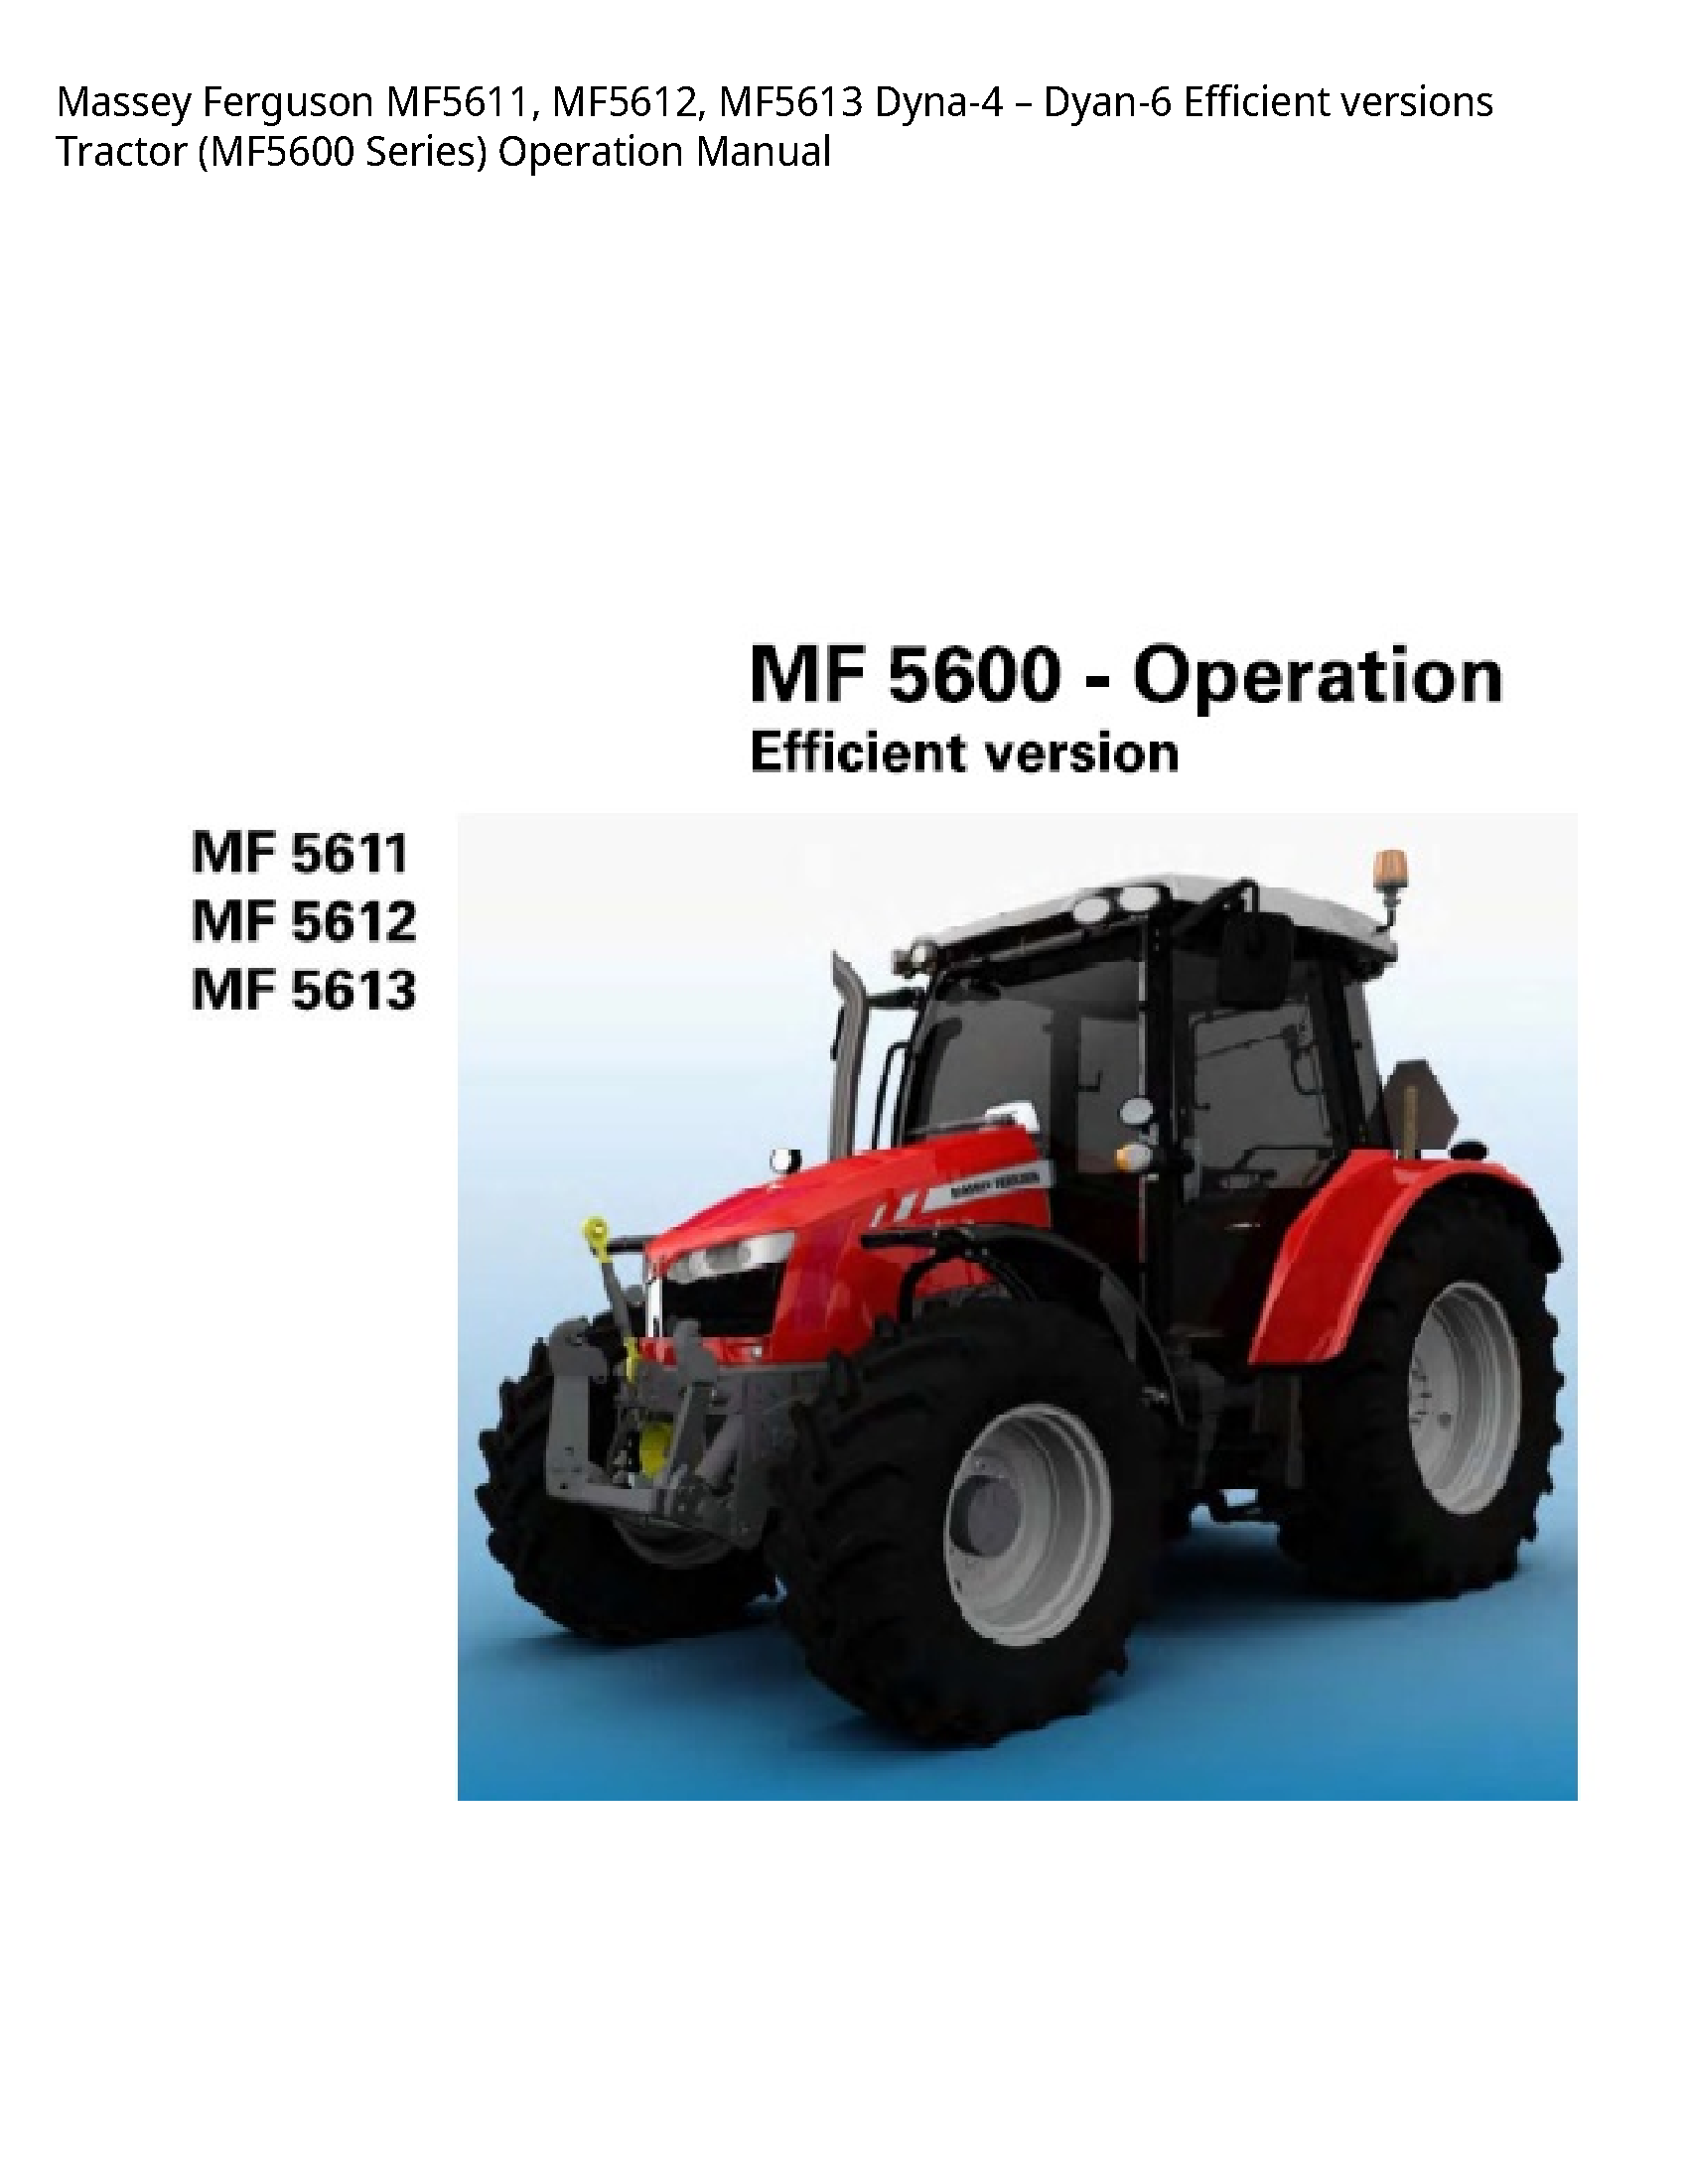 Massey Ferguson MF5611 Efficient versions Tractor Series) Operation manual